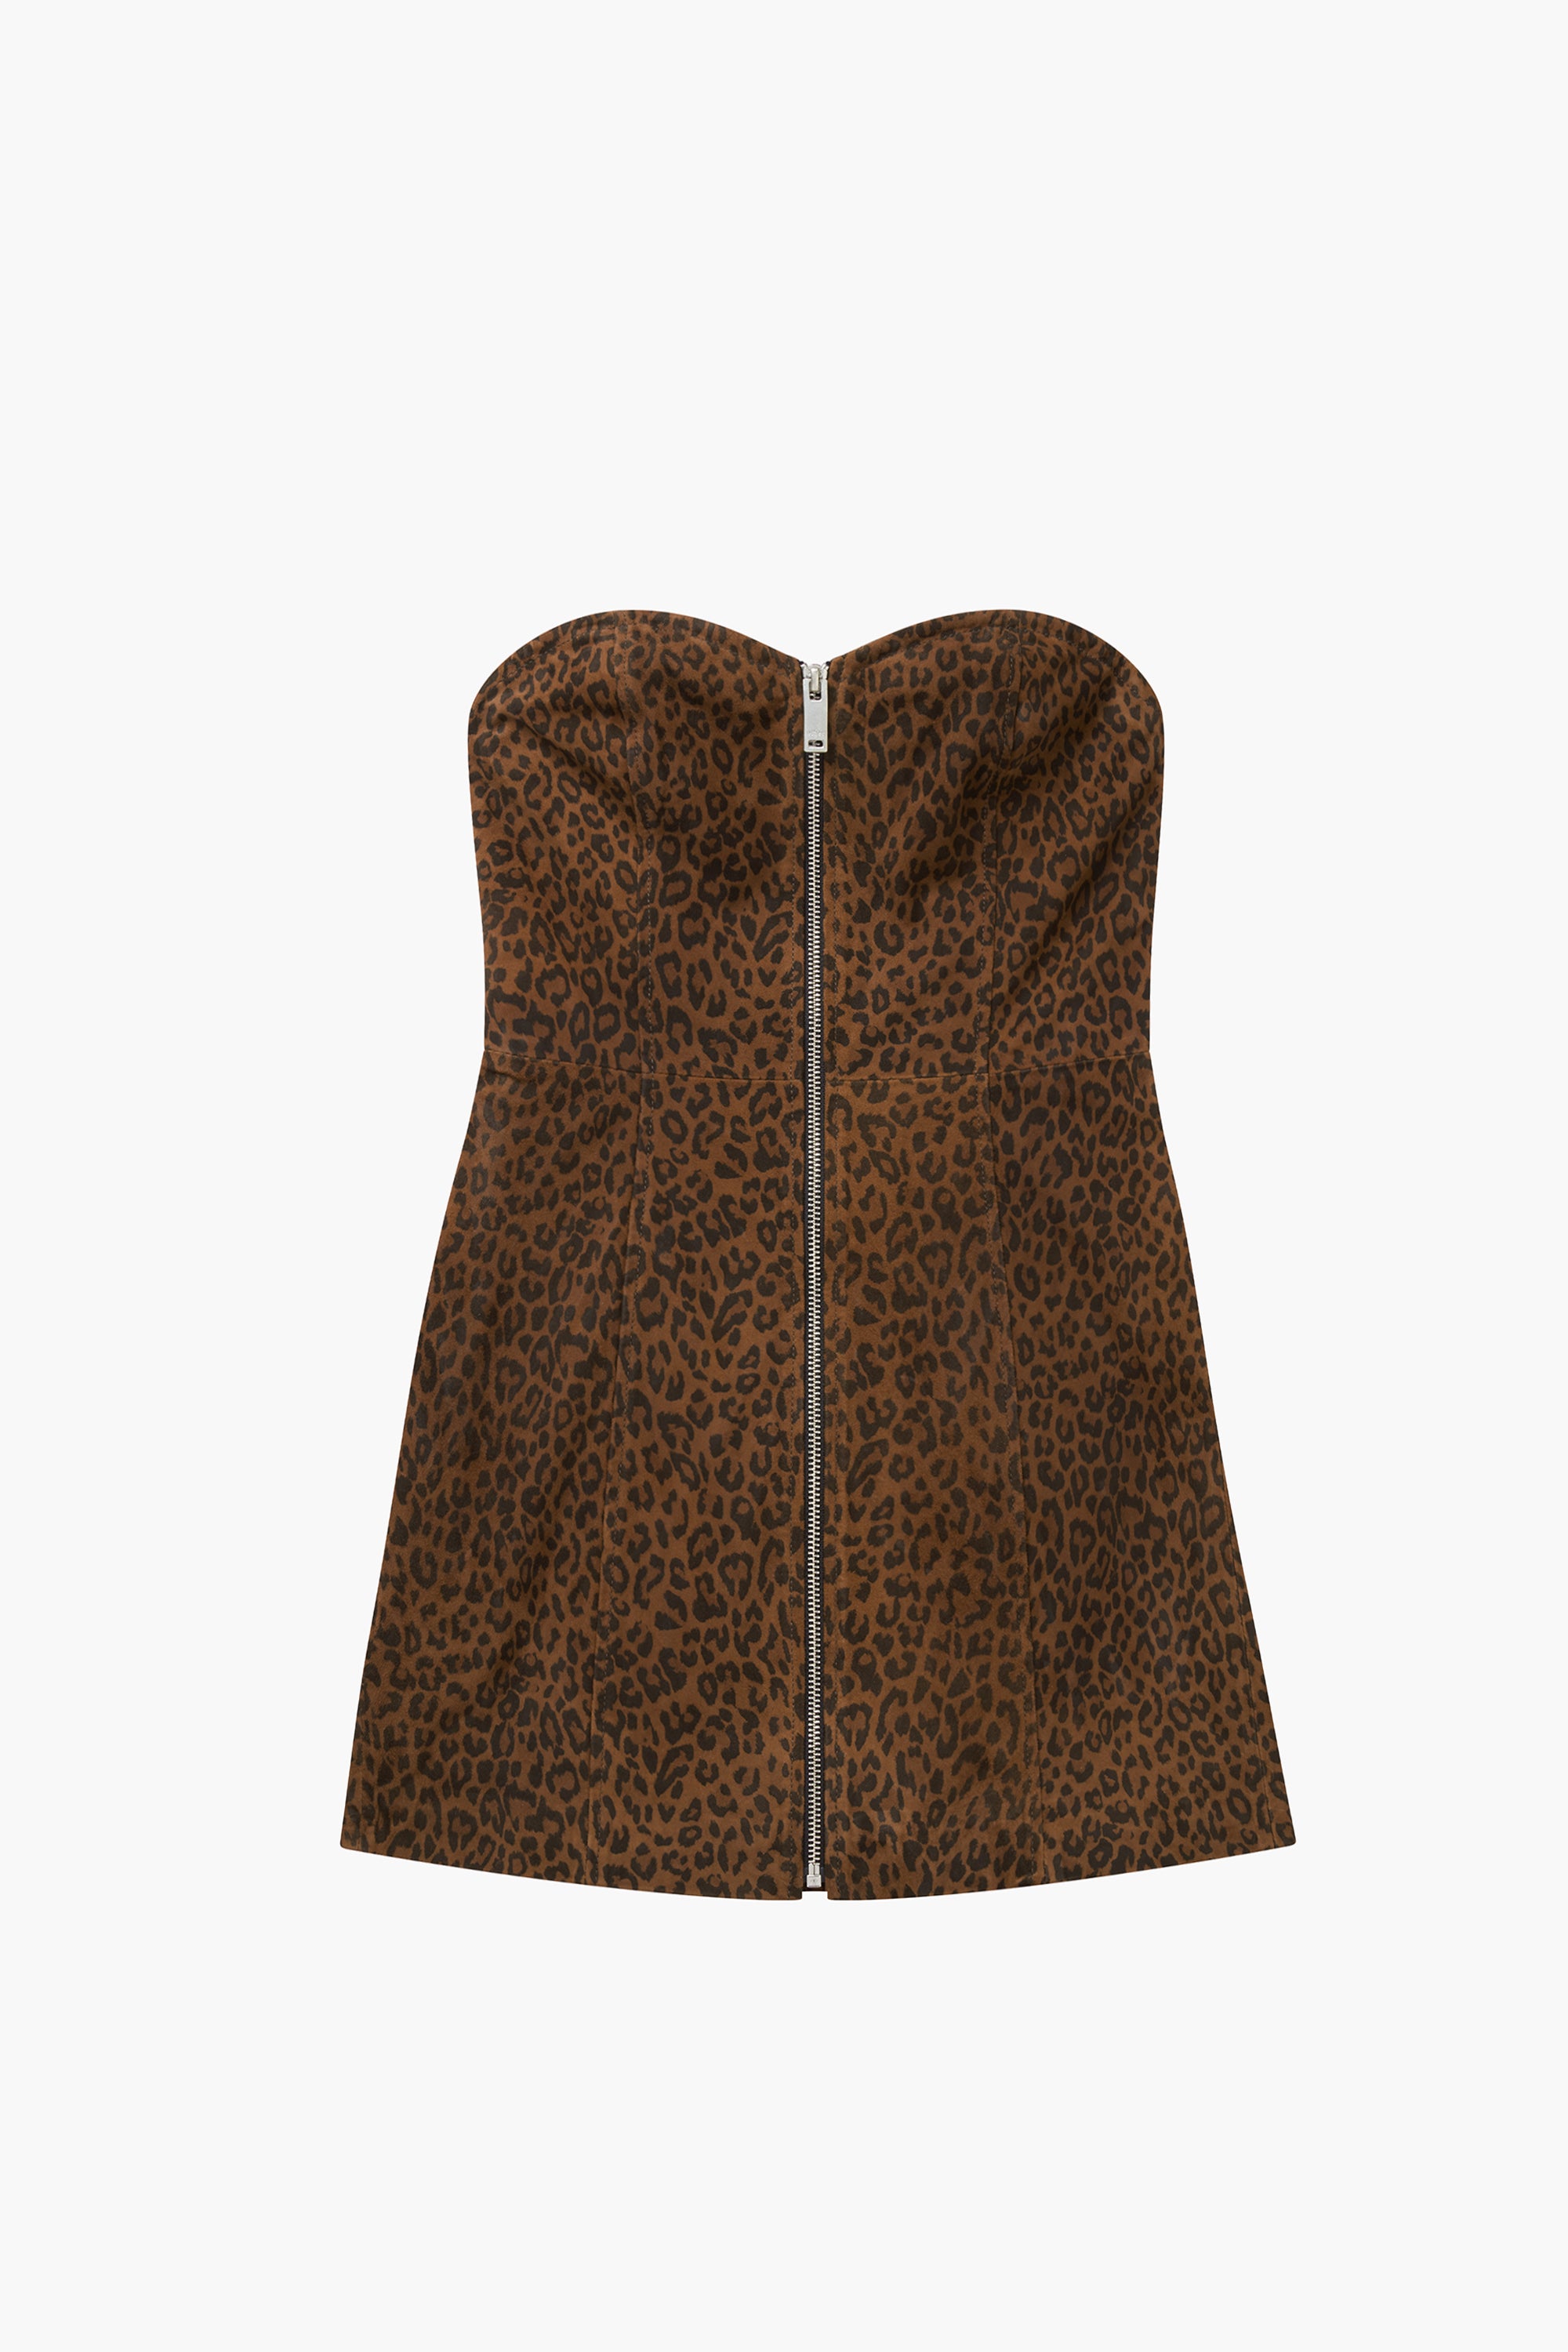 Bandeau Bra Top with Leopard Print Design Brown - Southern Fashion